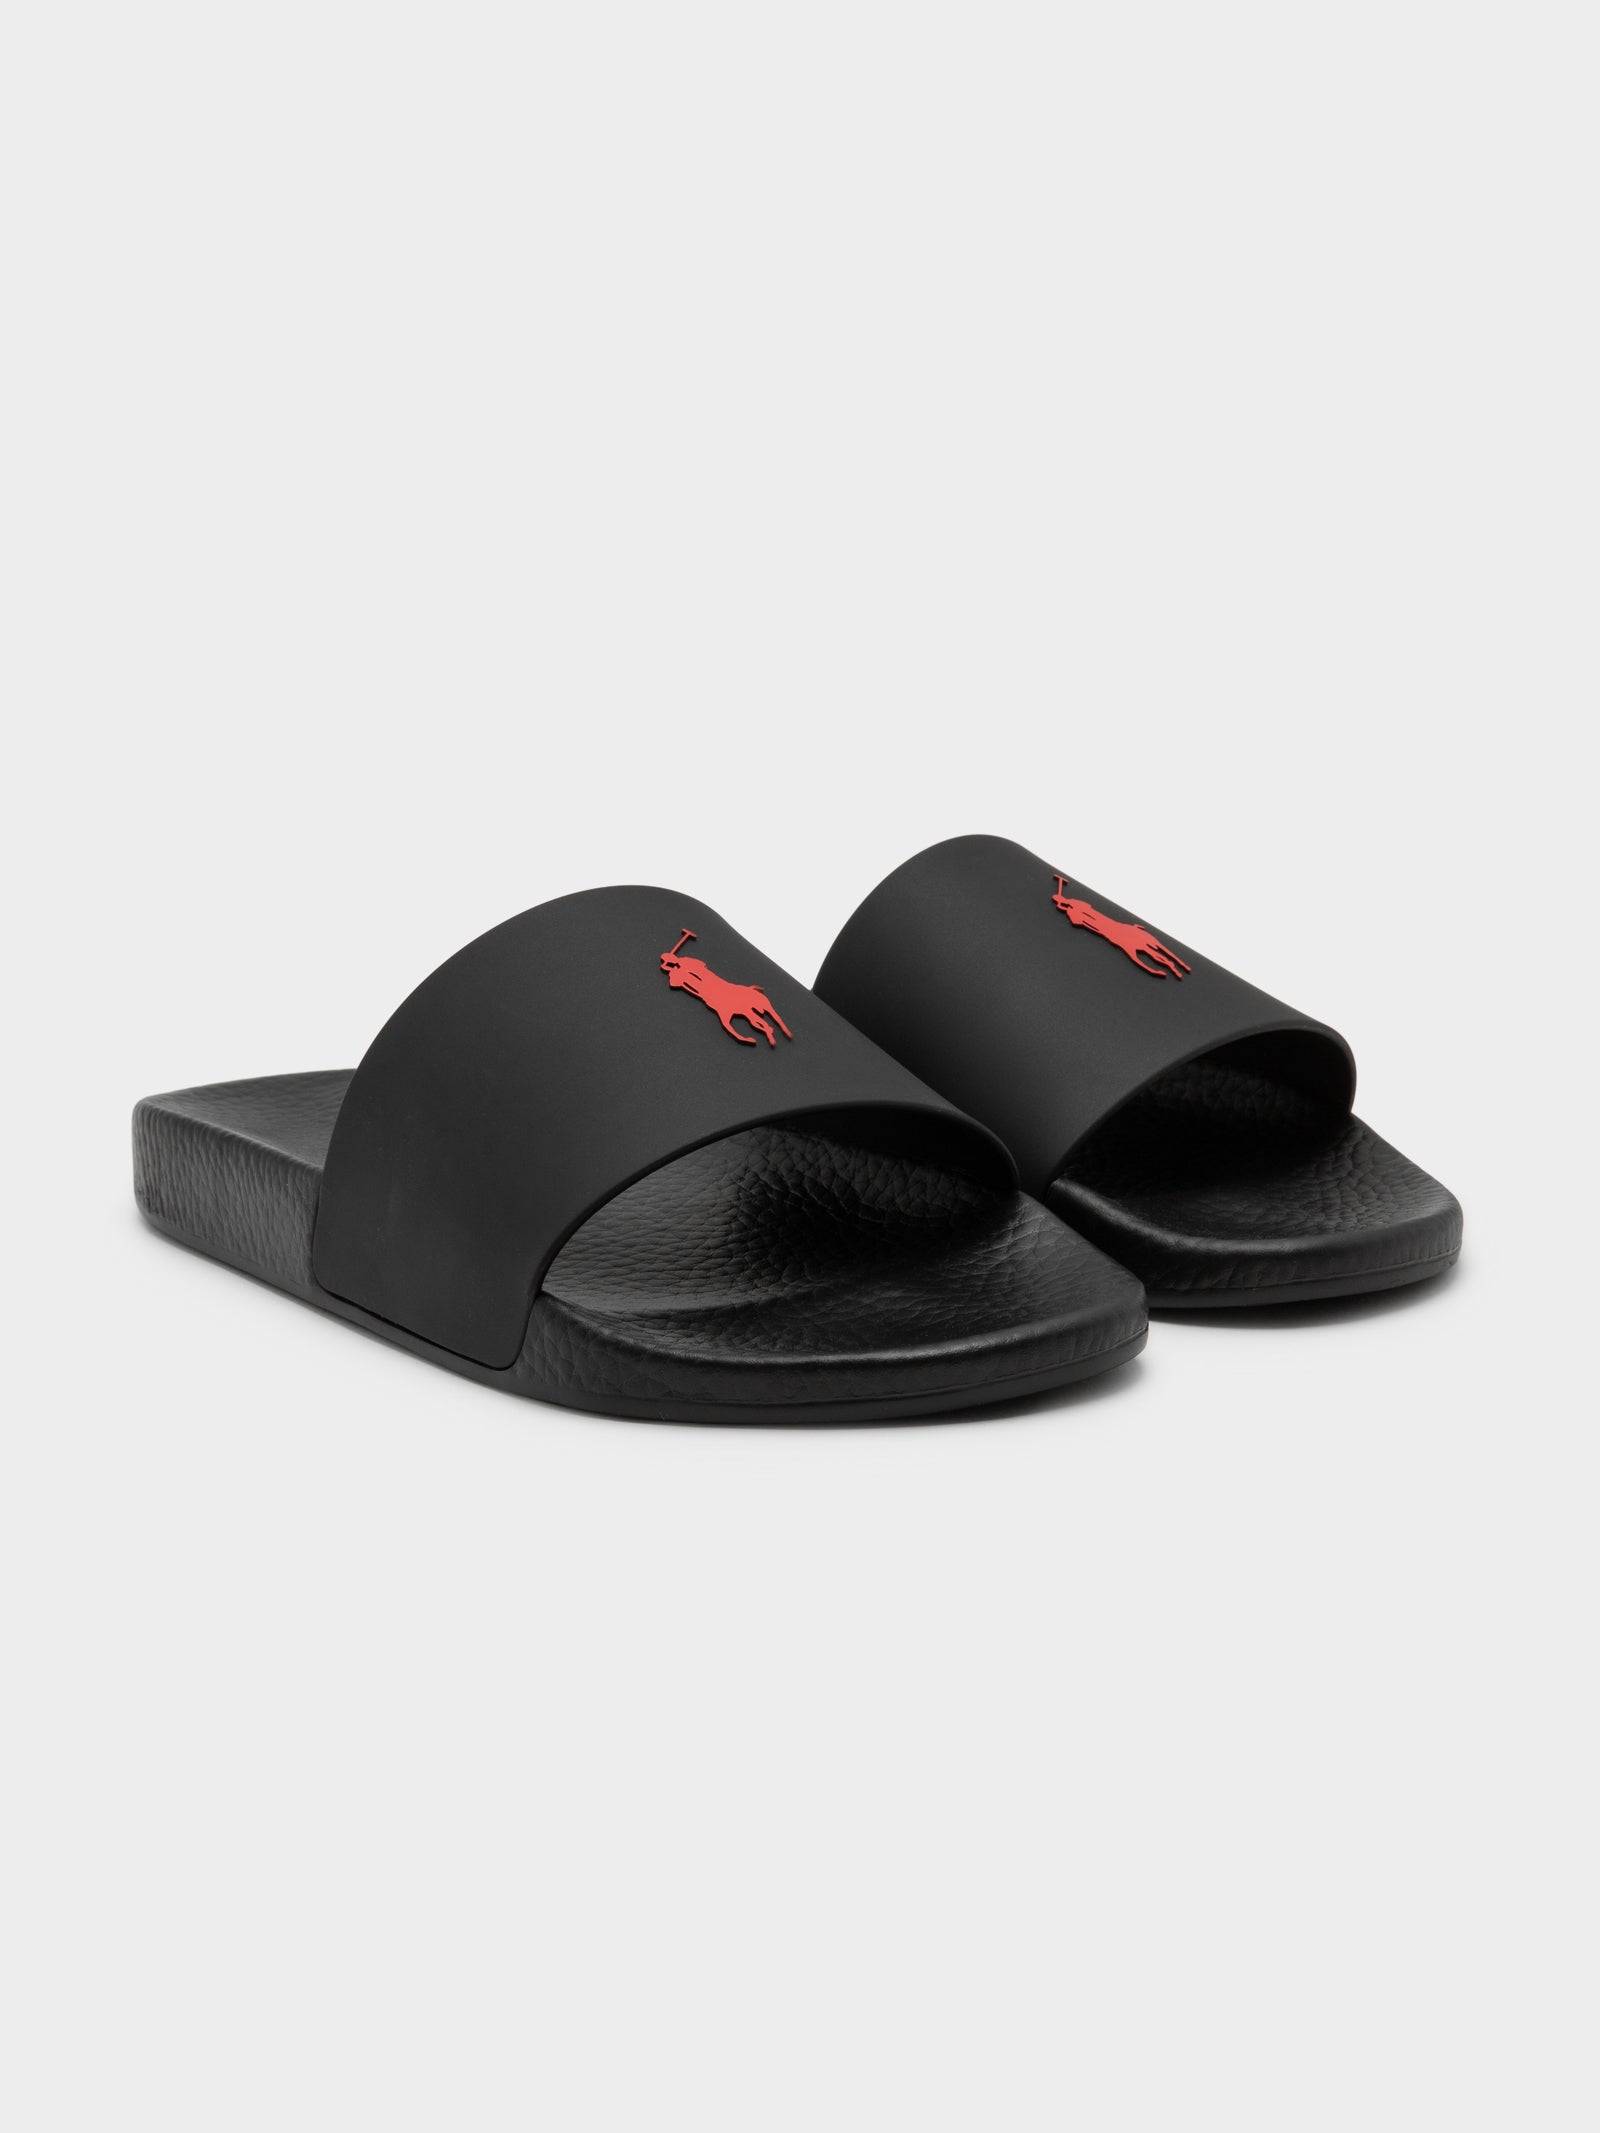 Unisex Polo Sport Slides in Red & Black